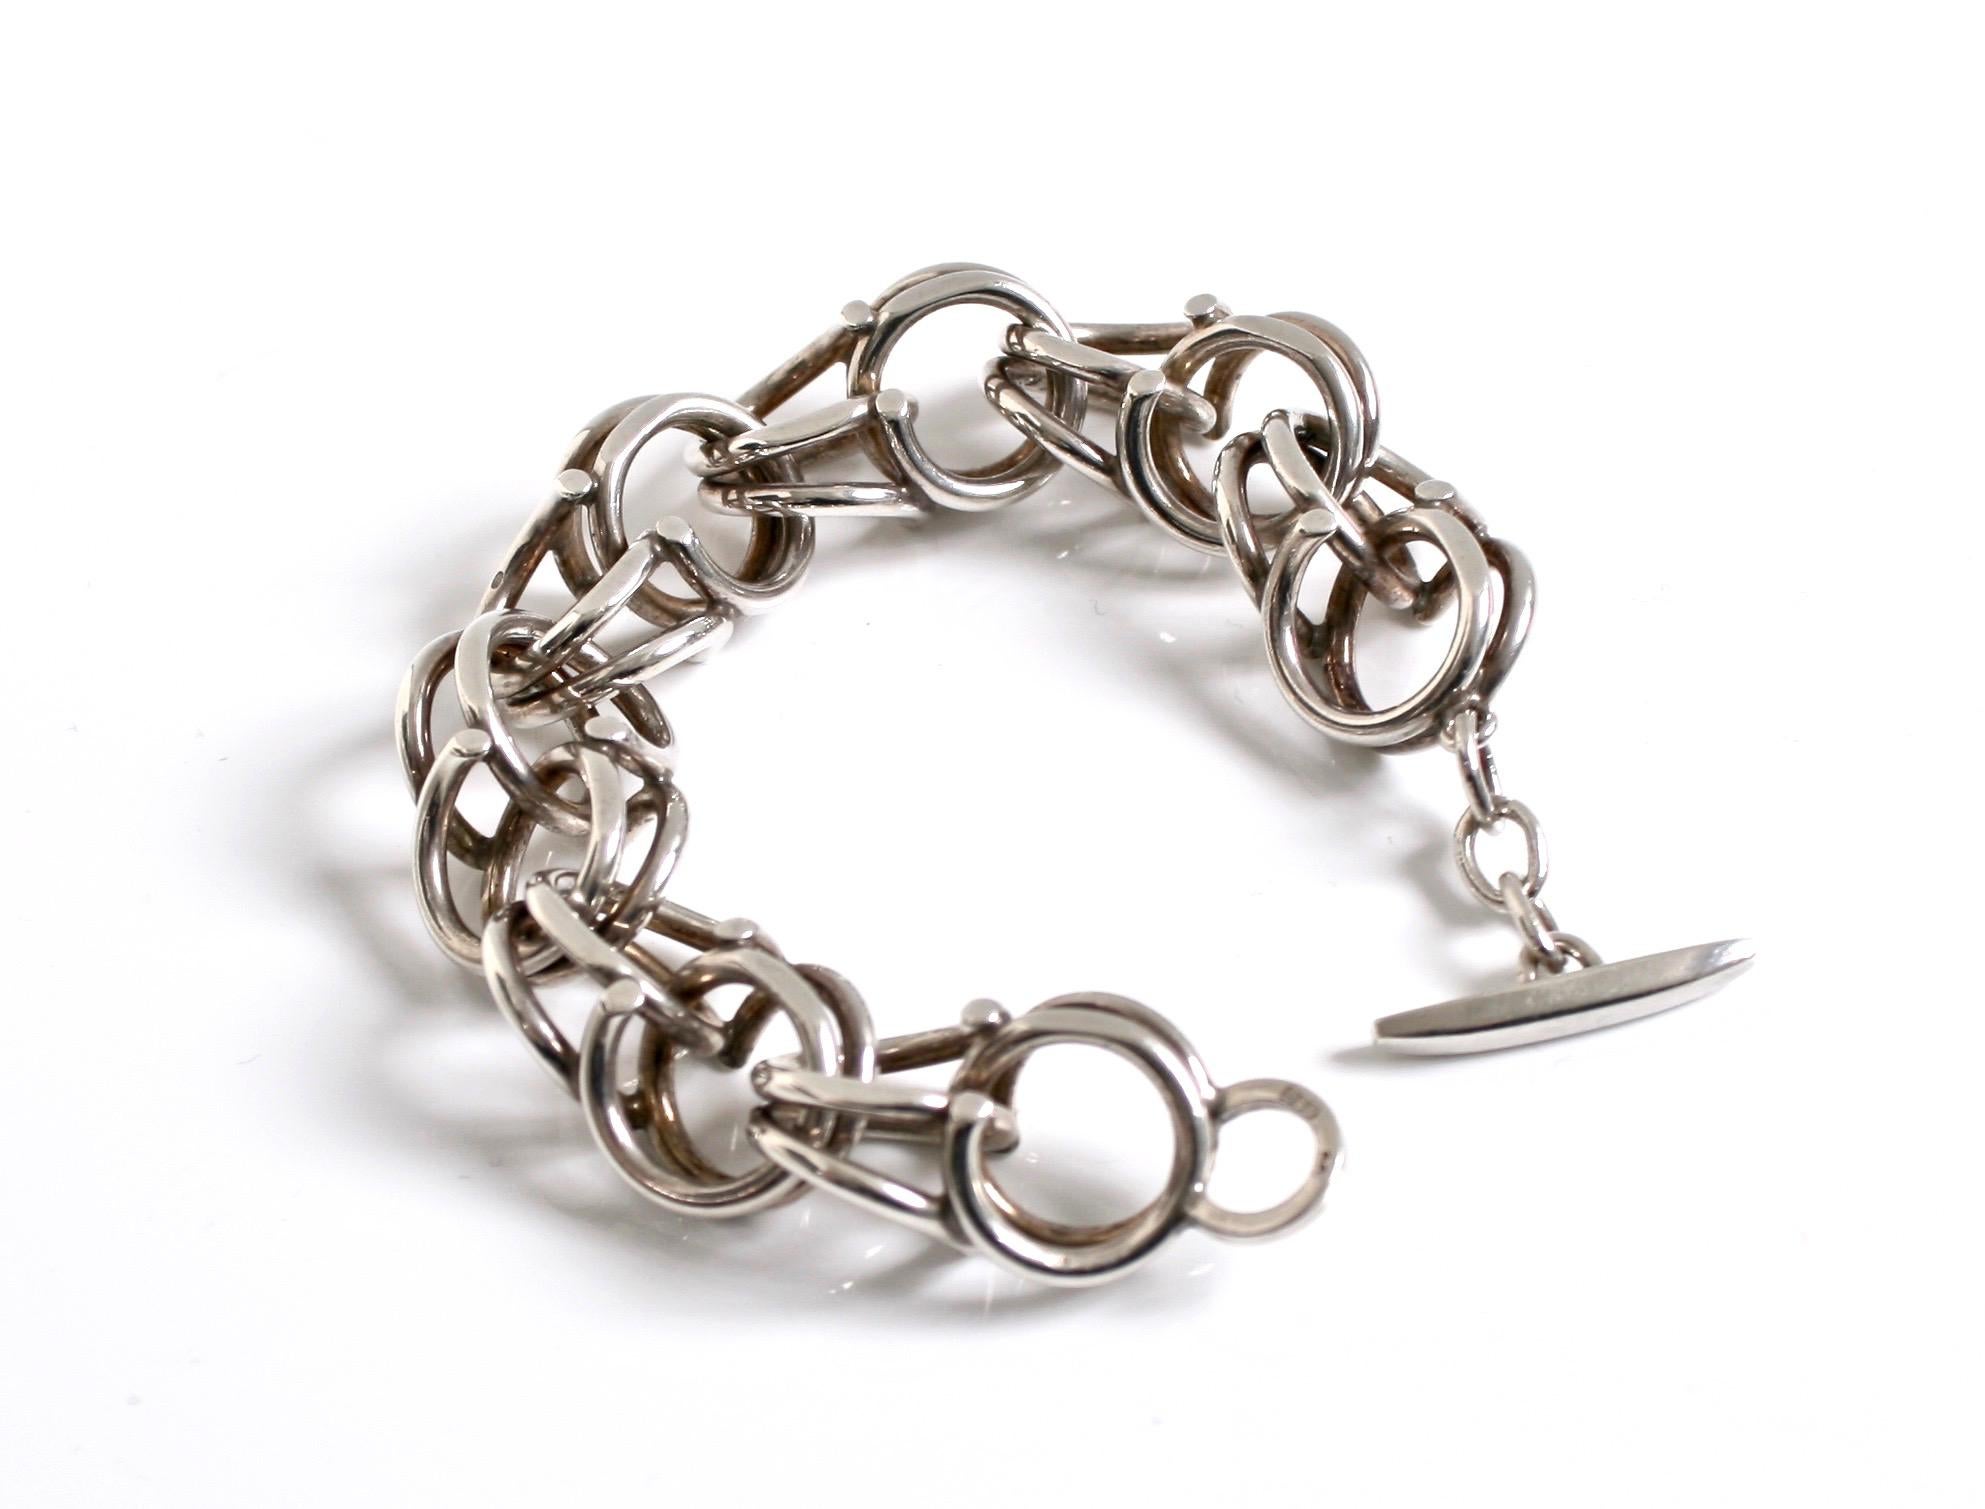 Heavy Silver Chain Bracelet - 4 For Sale on 1stDibs